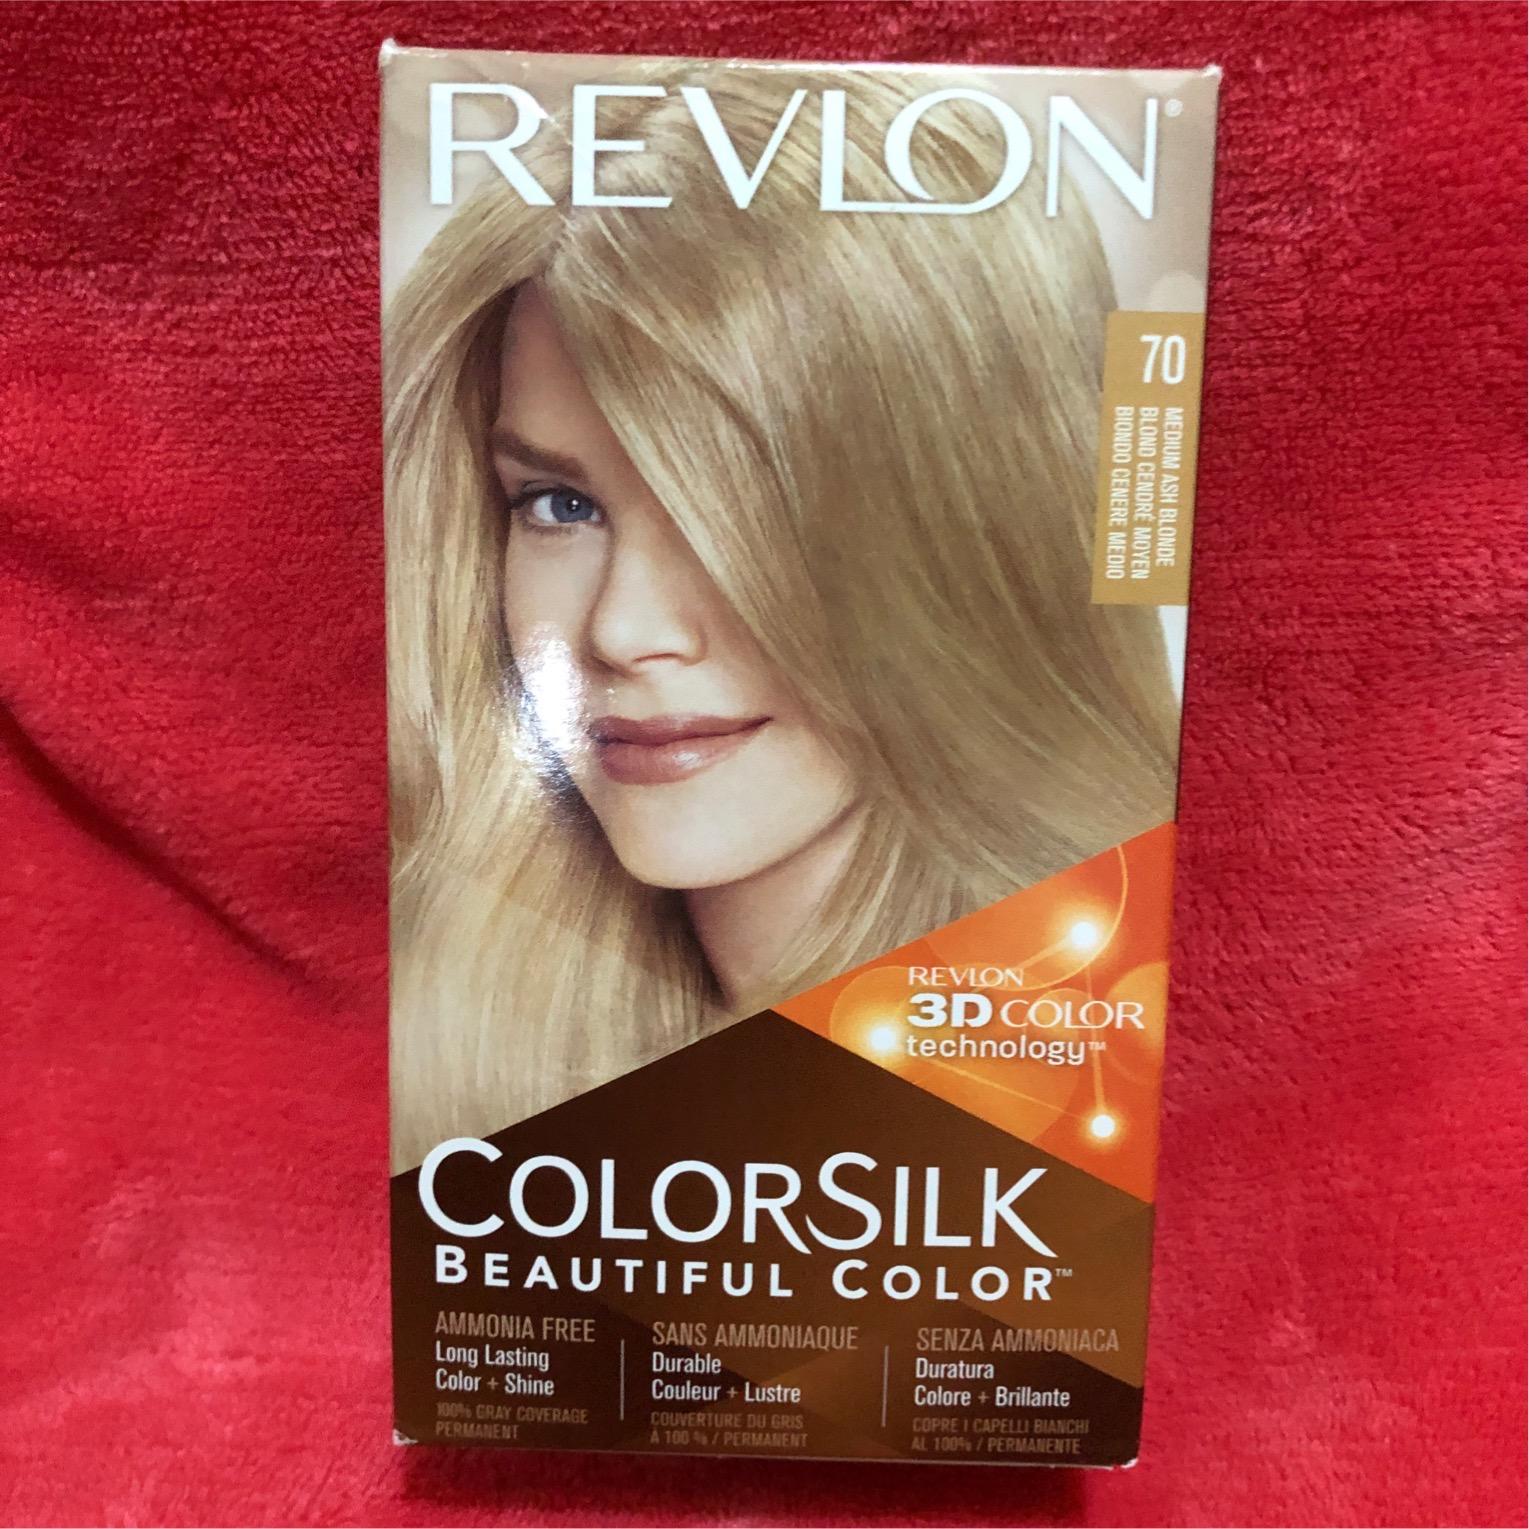 revlon colorsilk medium ash blonde 70 hair color | Lazada PH